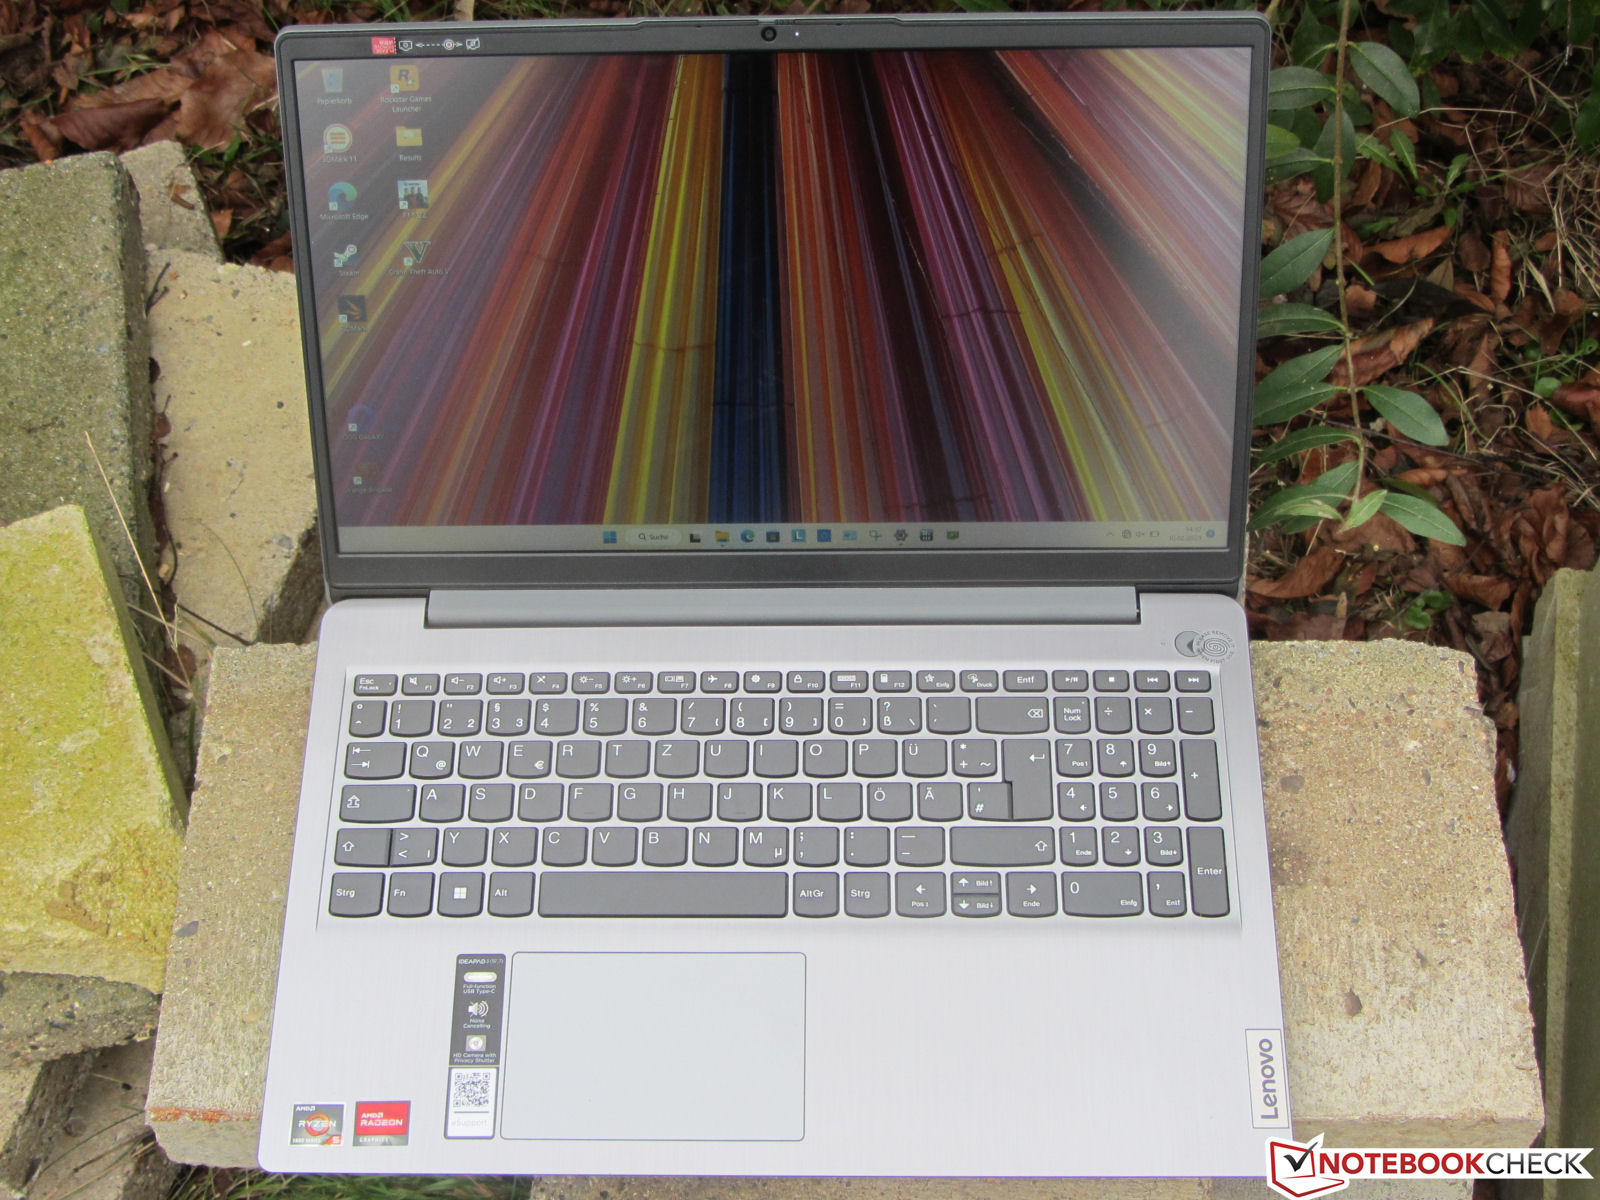 Lenovo Ideapad 3 15.6 Touch Screen Laptop - Intel Core i5 - 12GB Memory -  256GB SSD - Arctic Grey